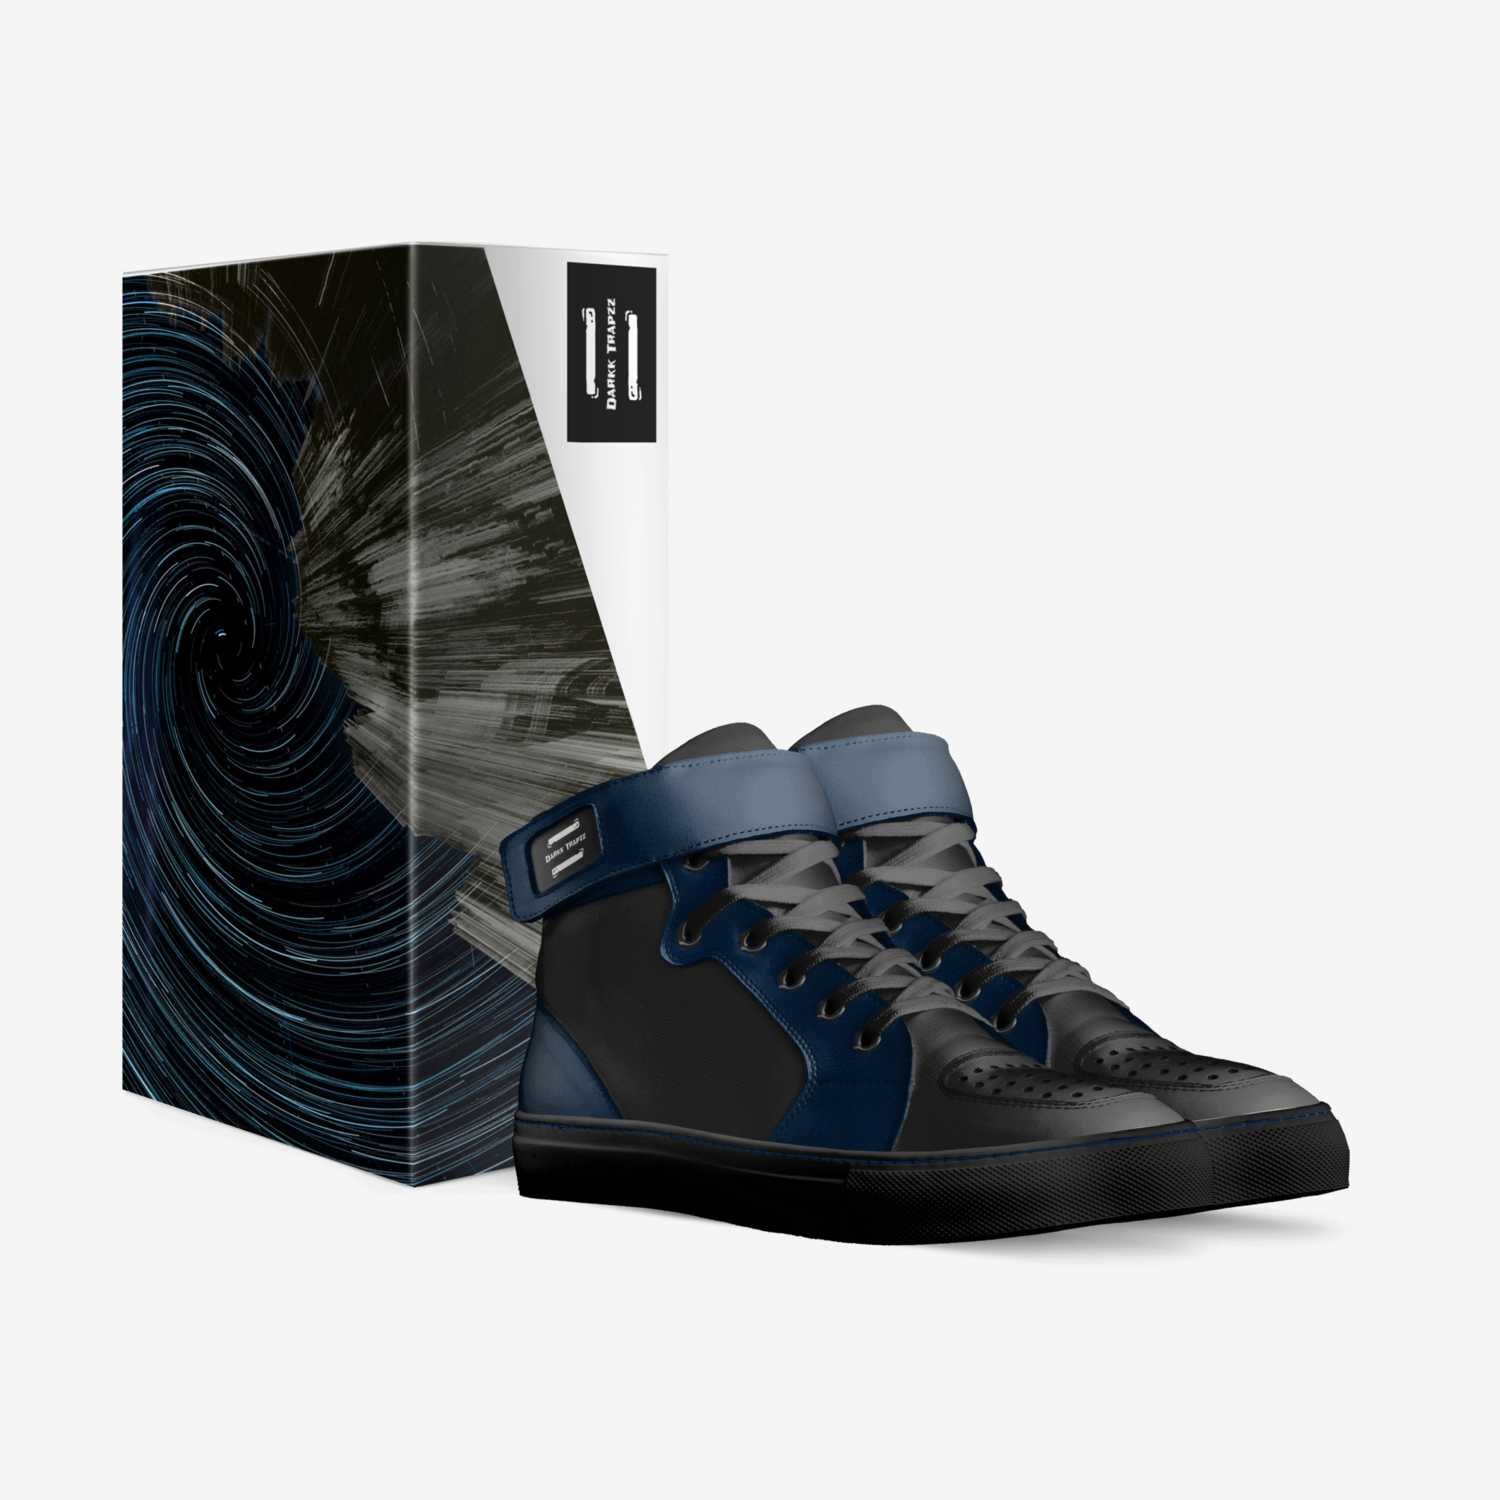 Darkk Trapzz custom made in Italy shoes by Alain Phanord | Box view